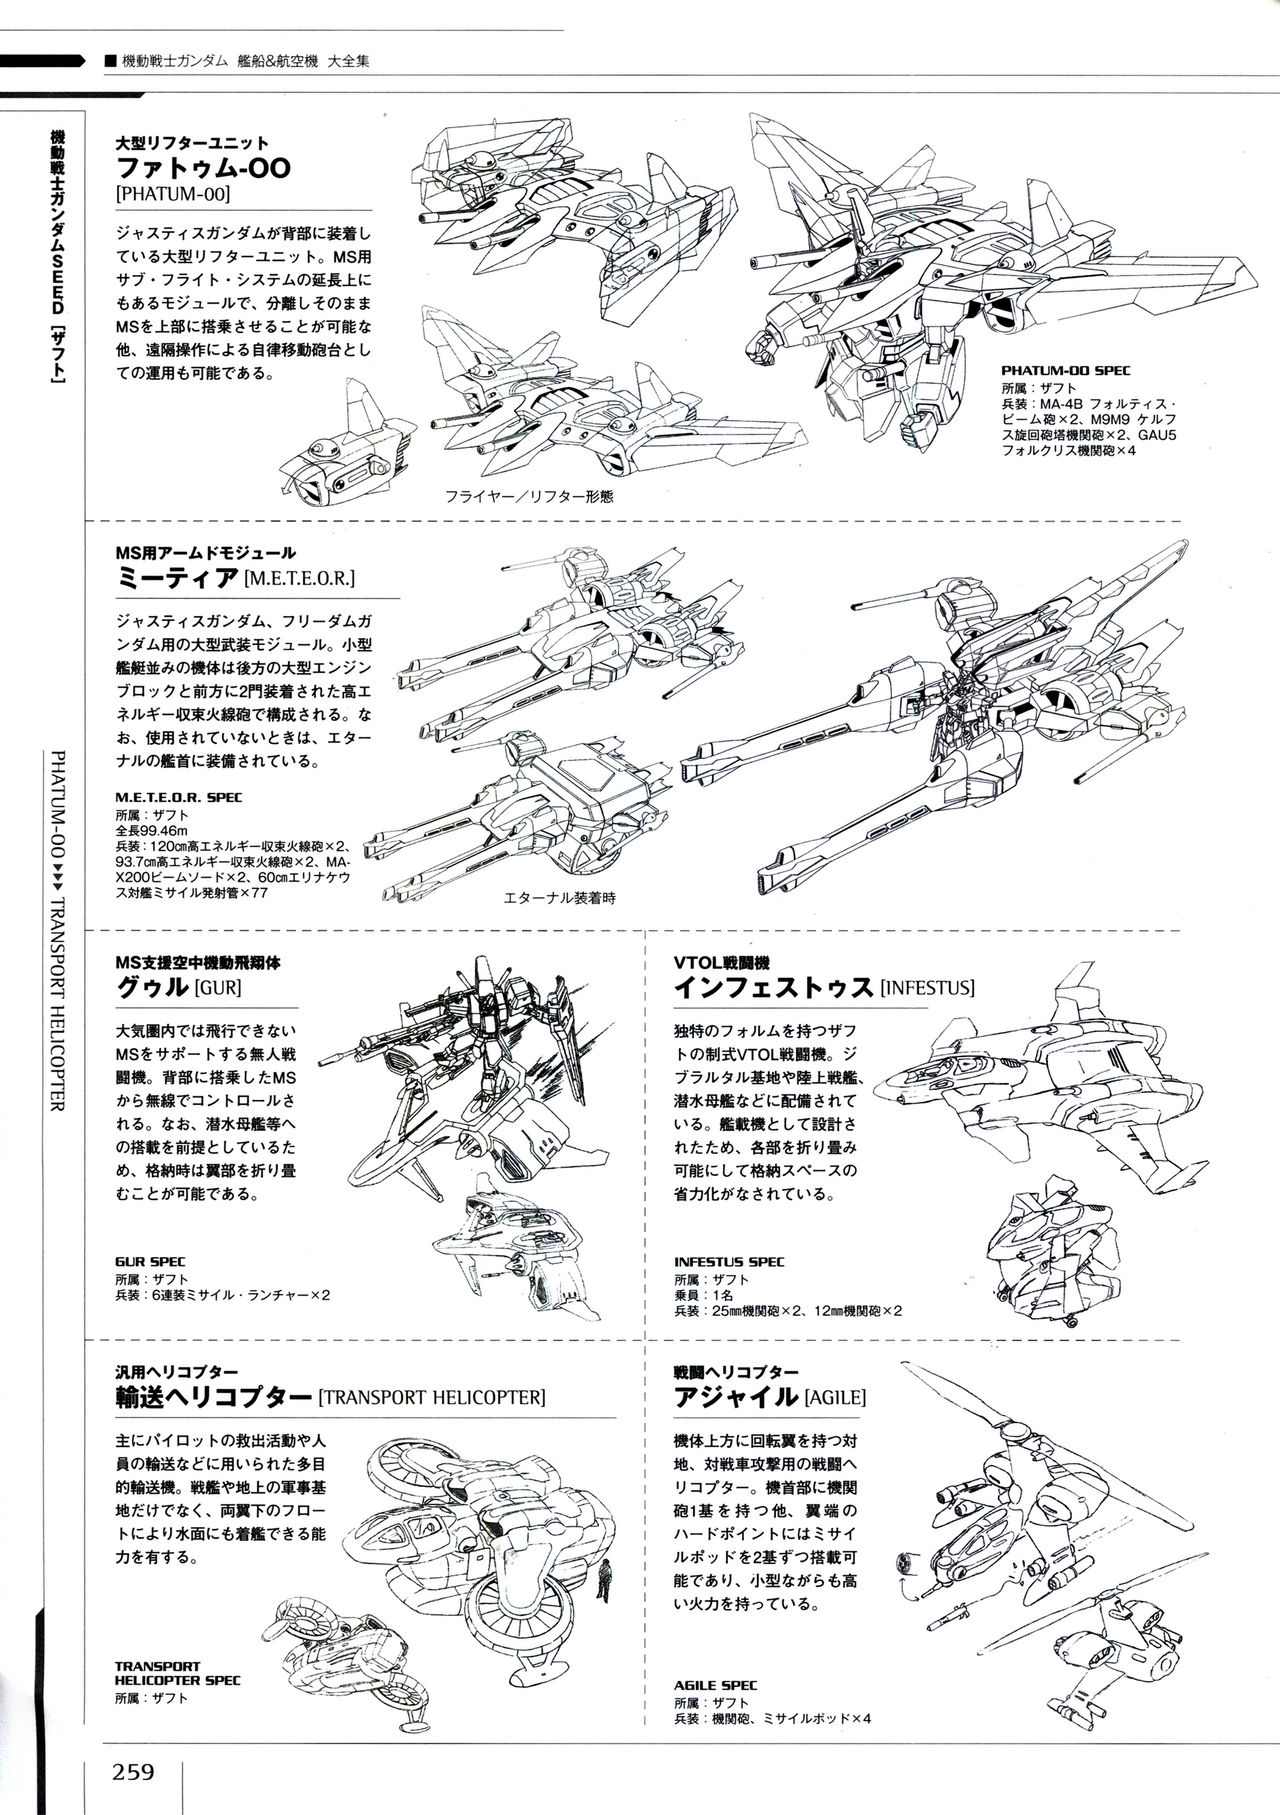 Mobile Suit Gundam - Ship & Aerospace Plane Encyclopedia - Revised Edition 264